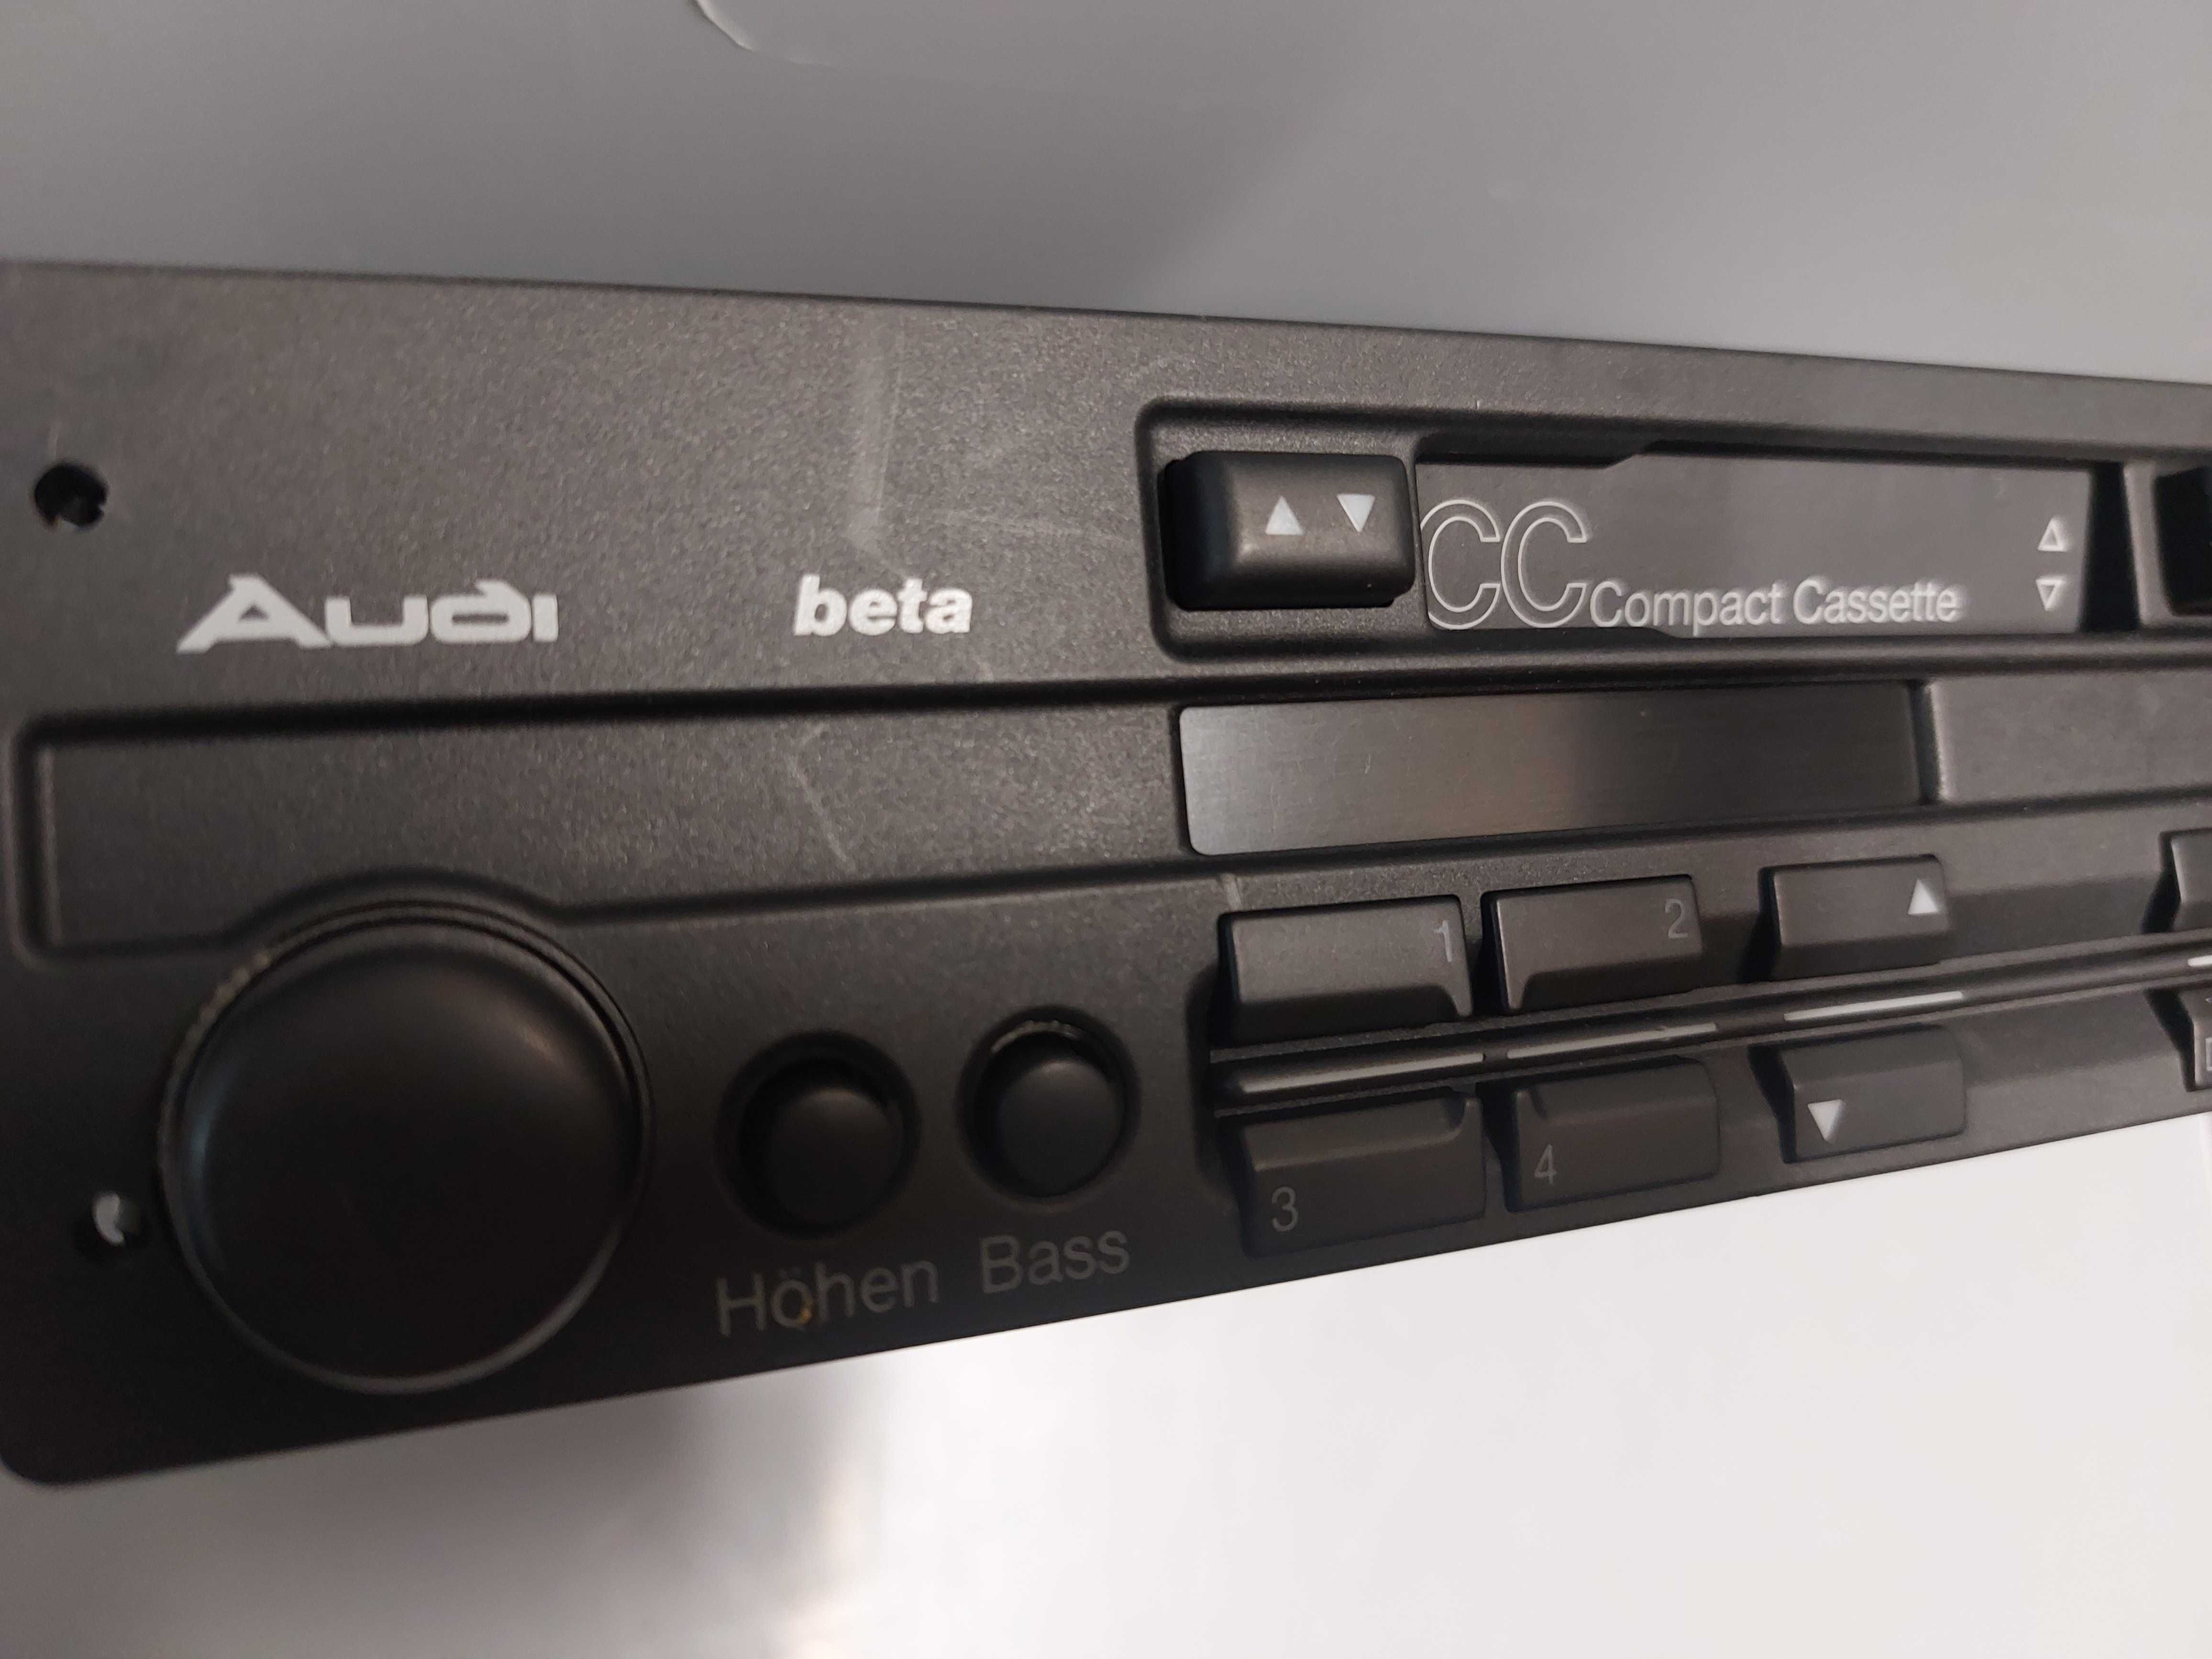 Radio Audi Beta CC